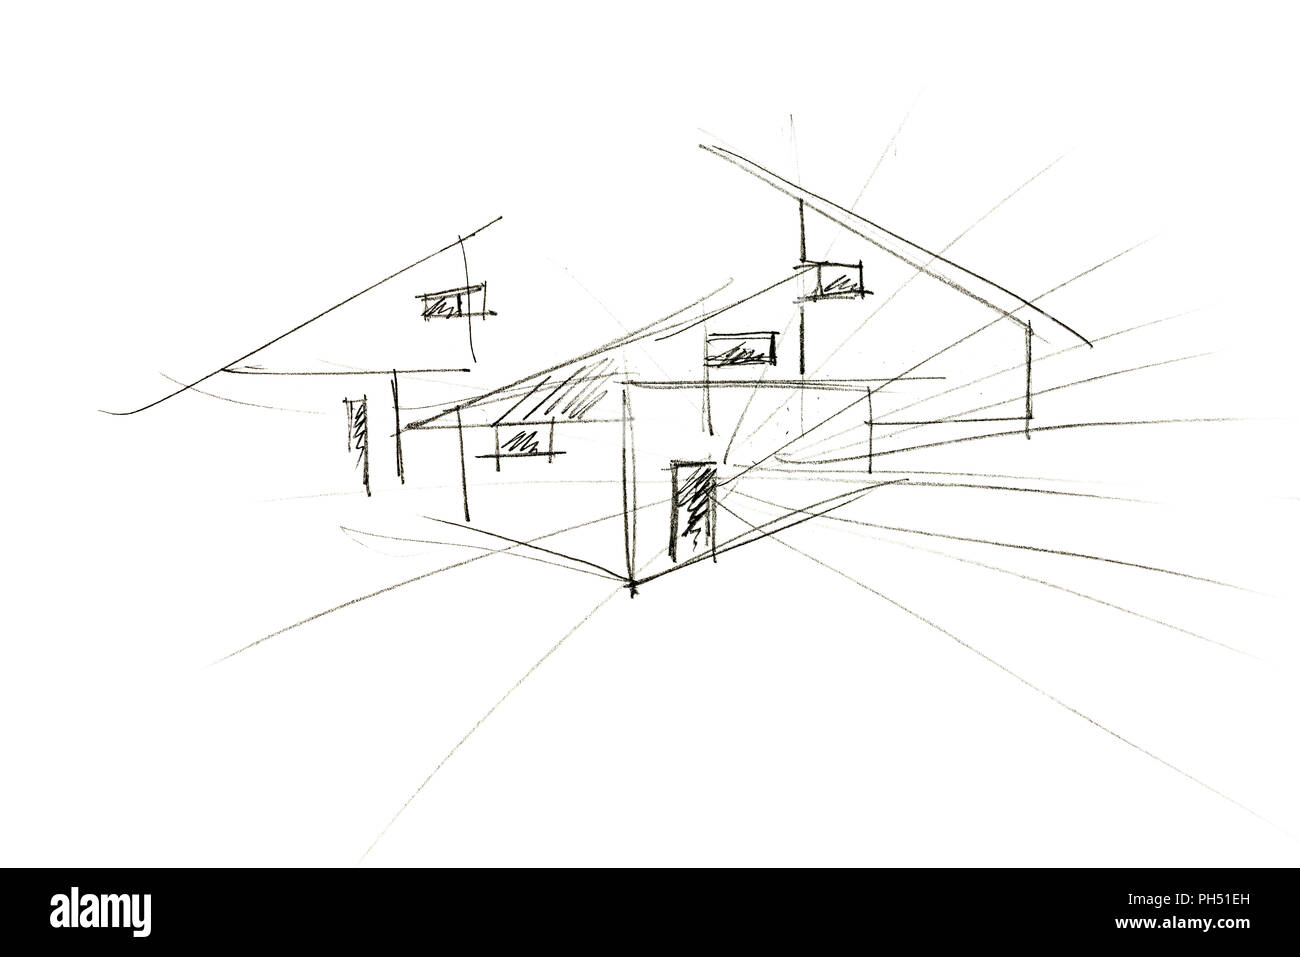 Architecture concept sketches June | Dana Krystle's online portfolio